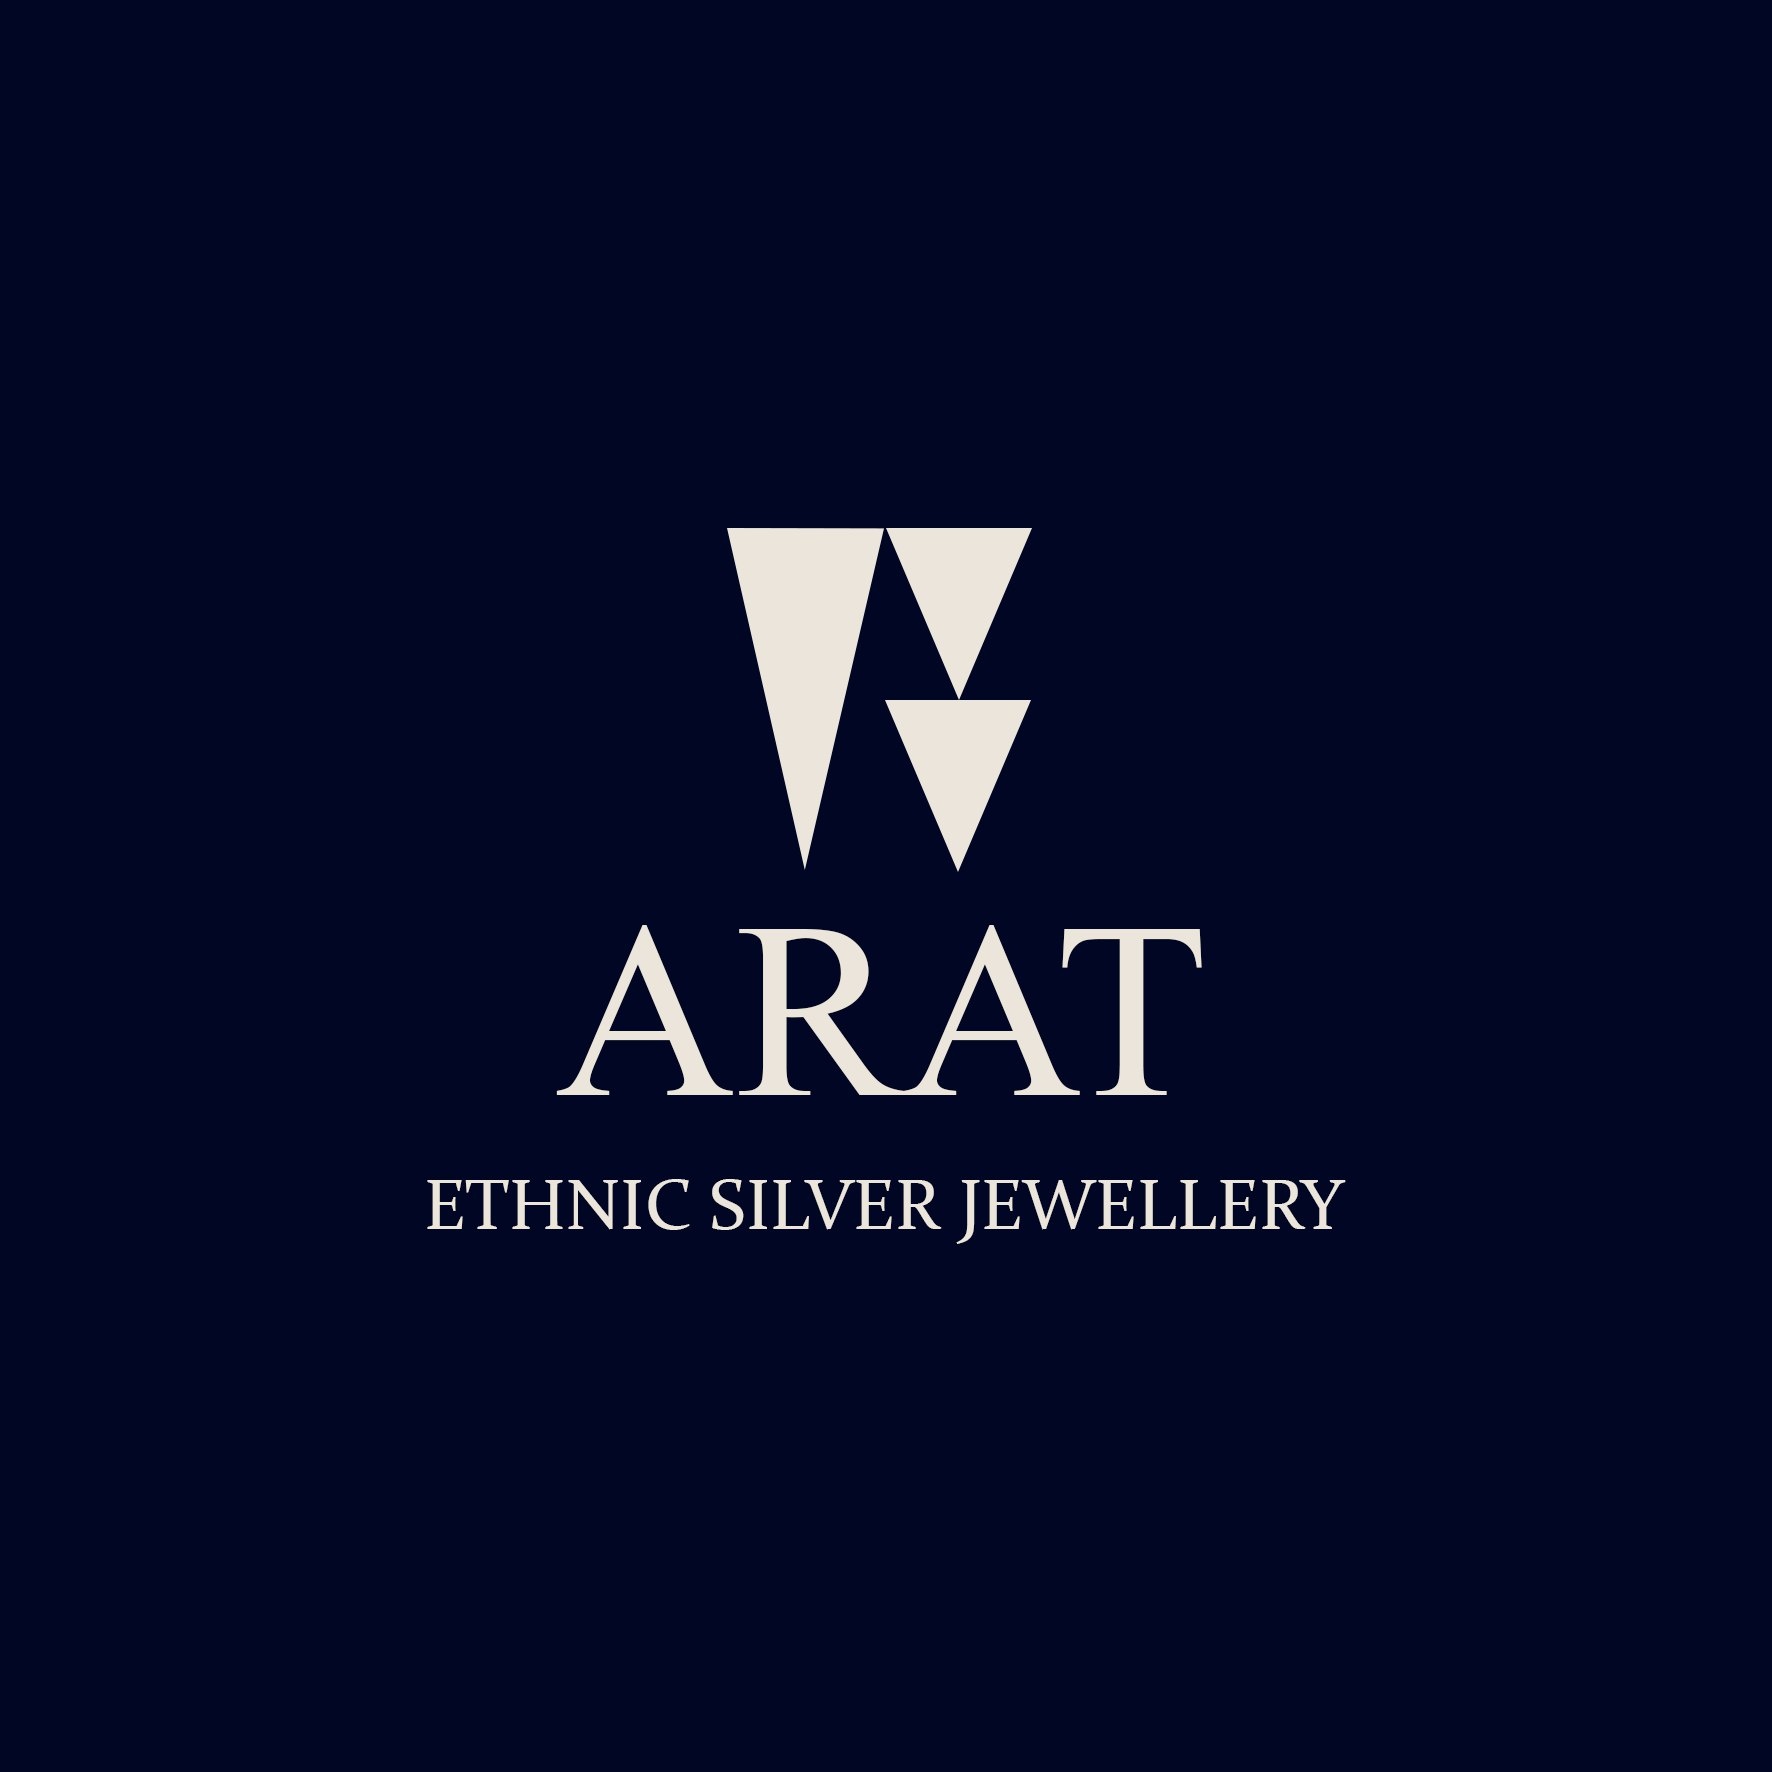 ARAT ethnic silver jewelry